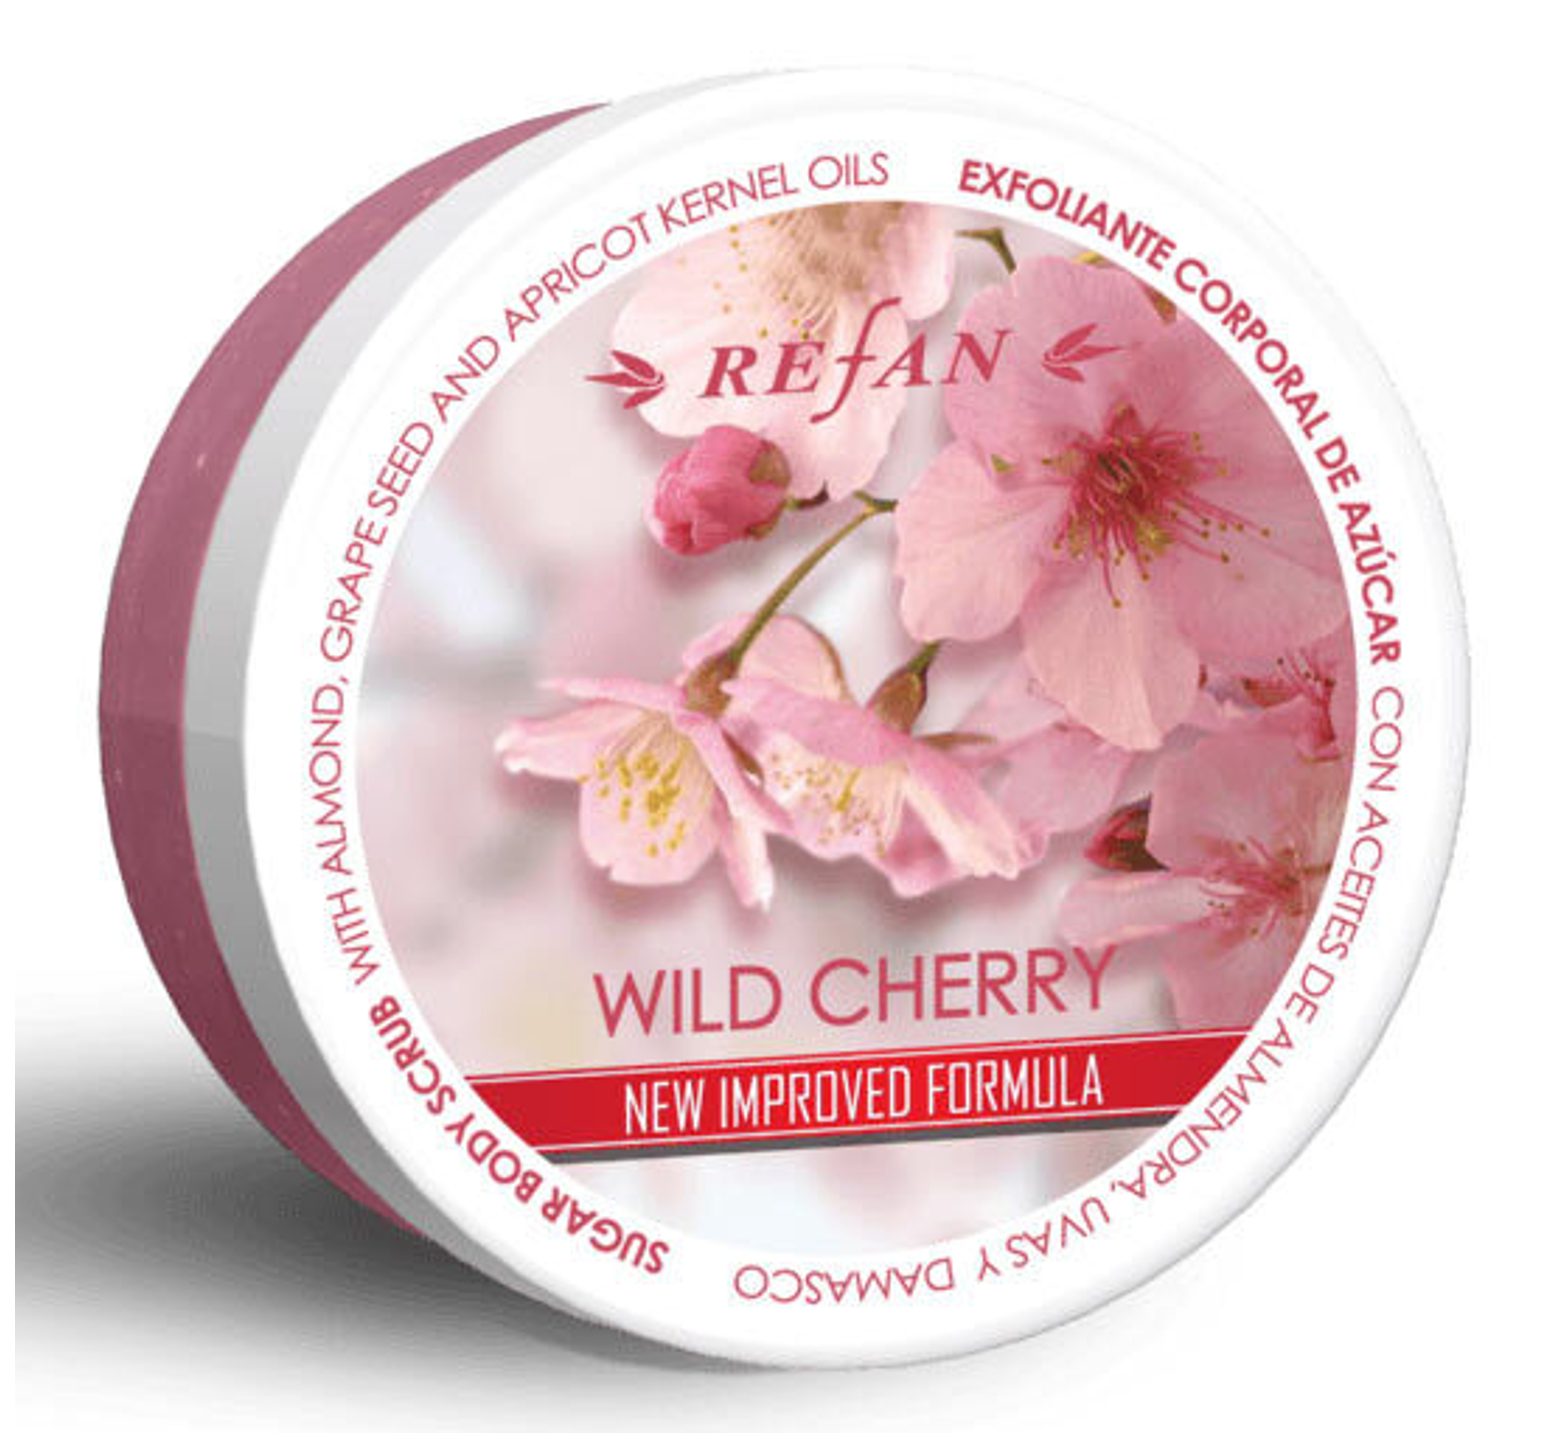 wild cherry scrub